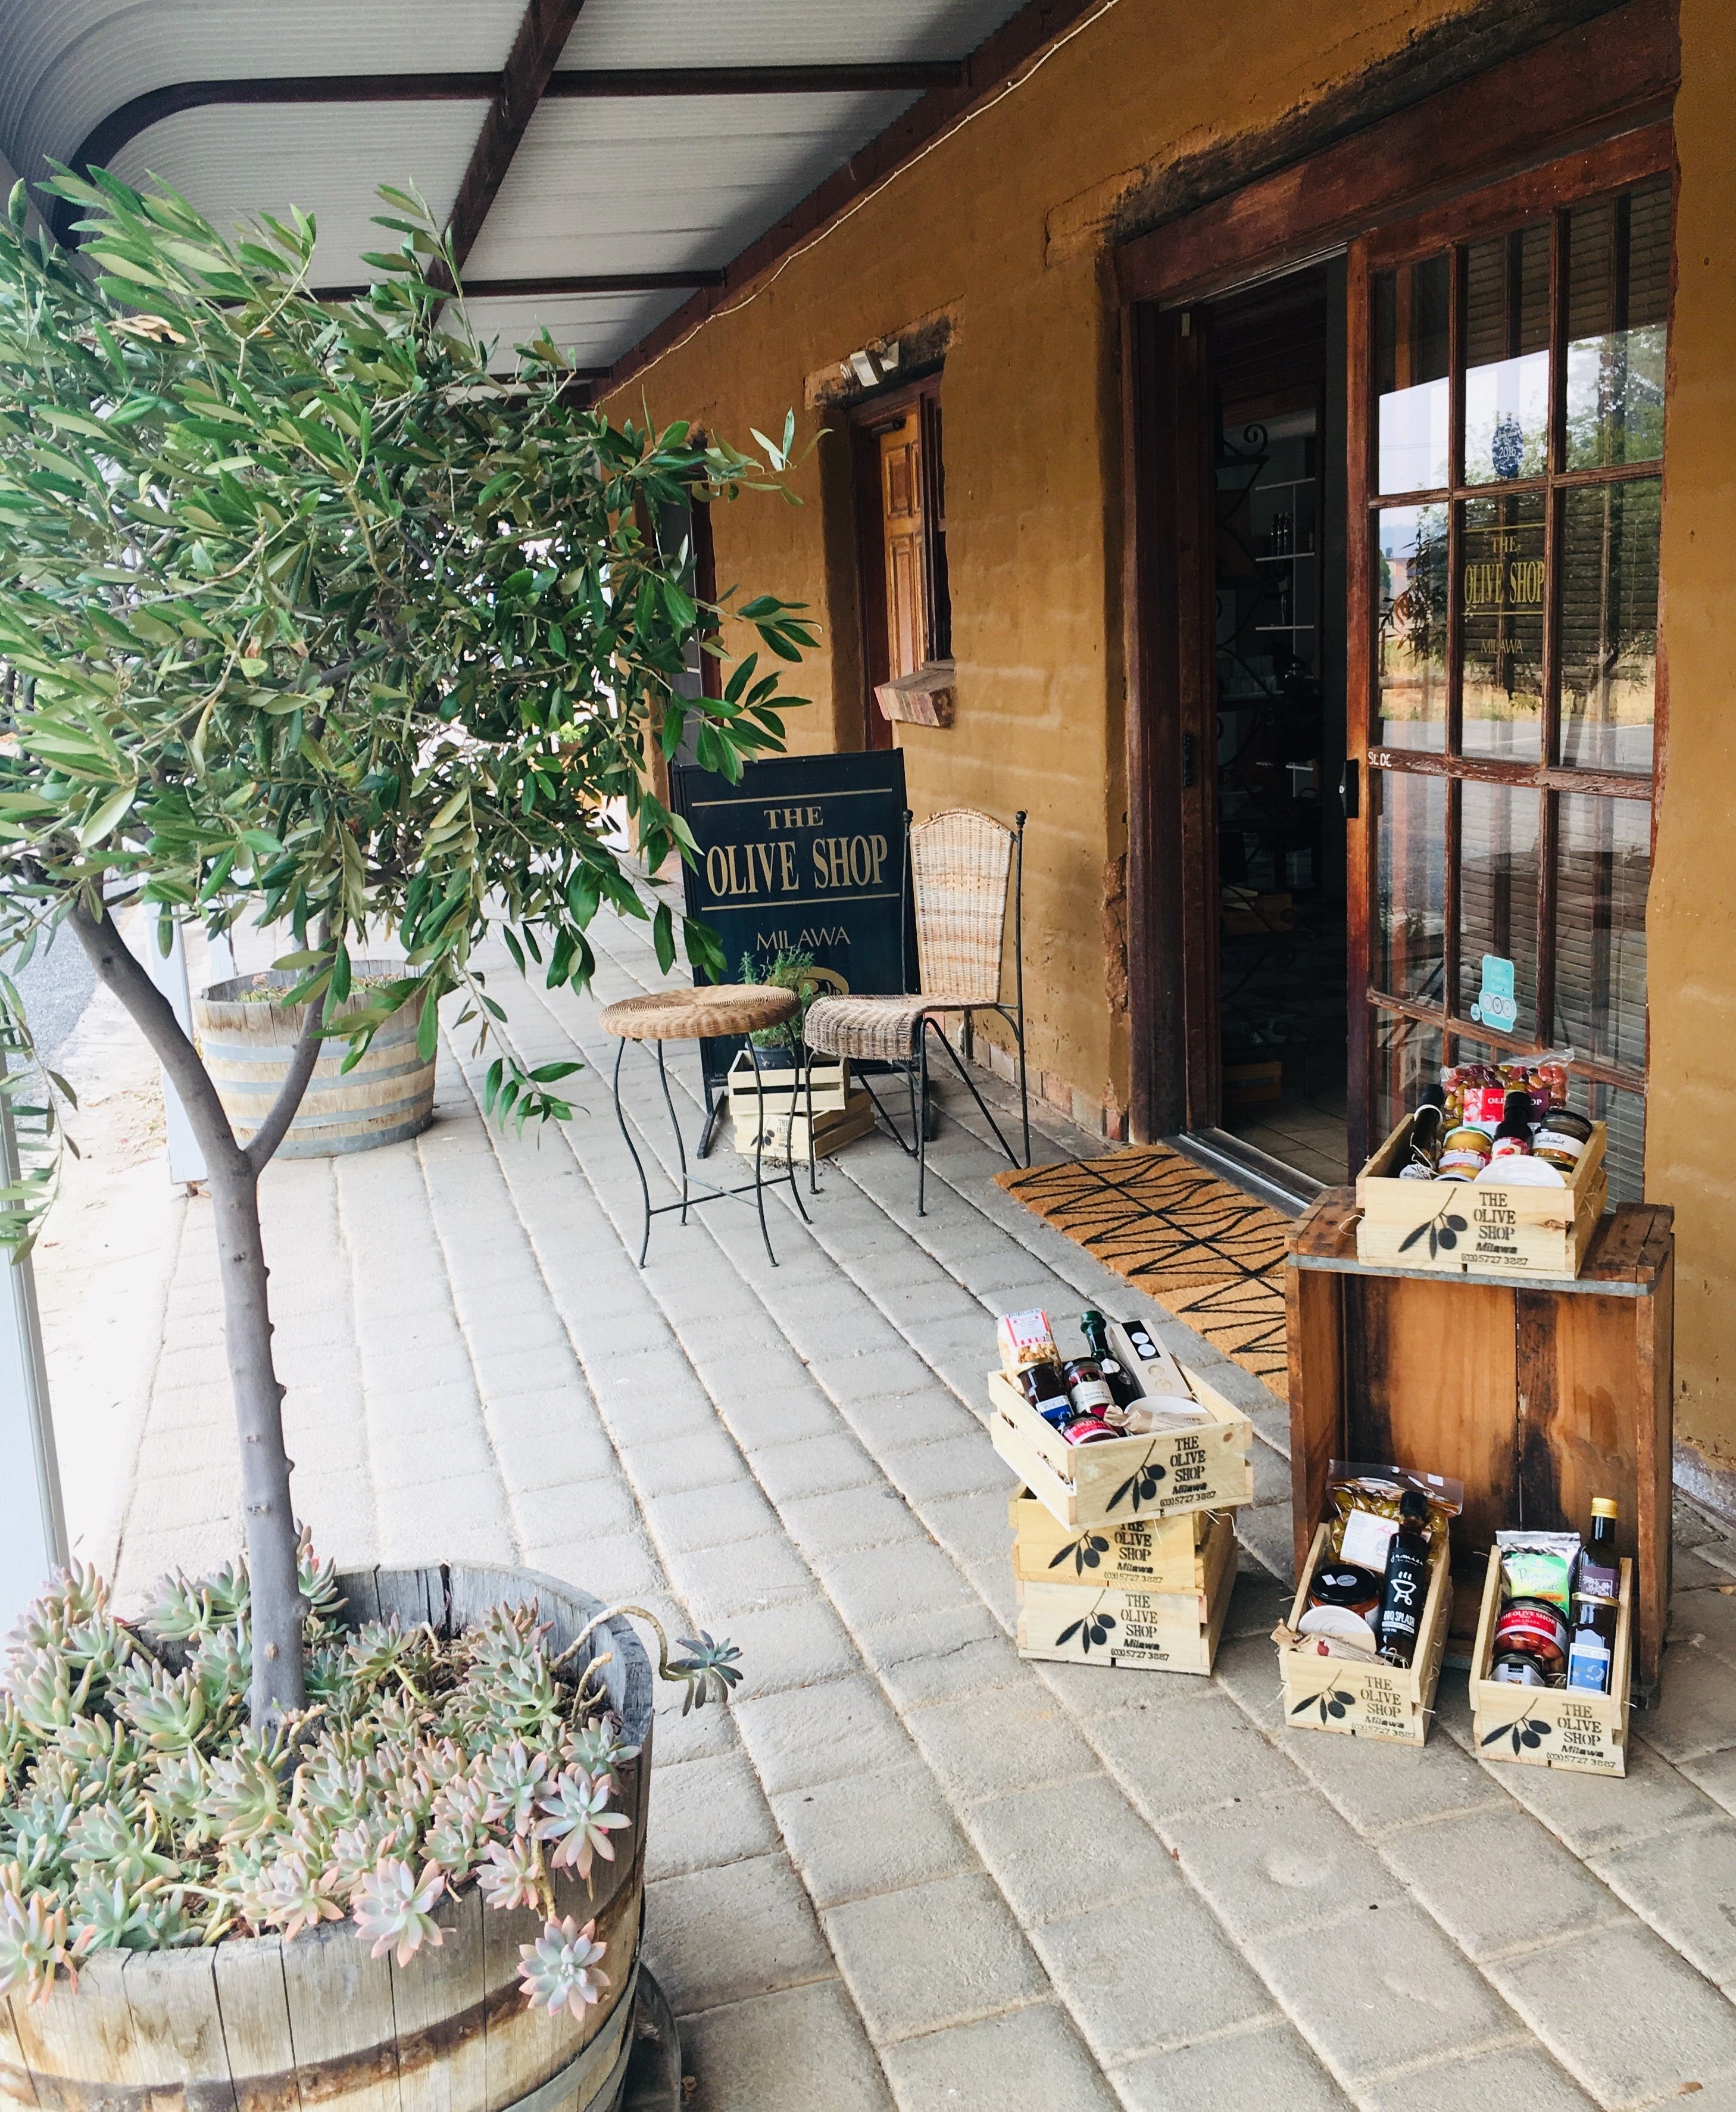 The Olive Shop - Milawa - Tourism Adelaide